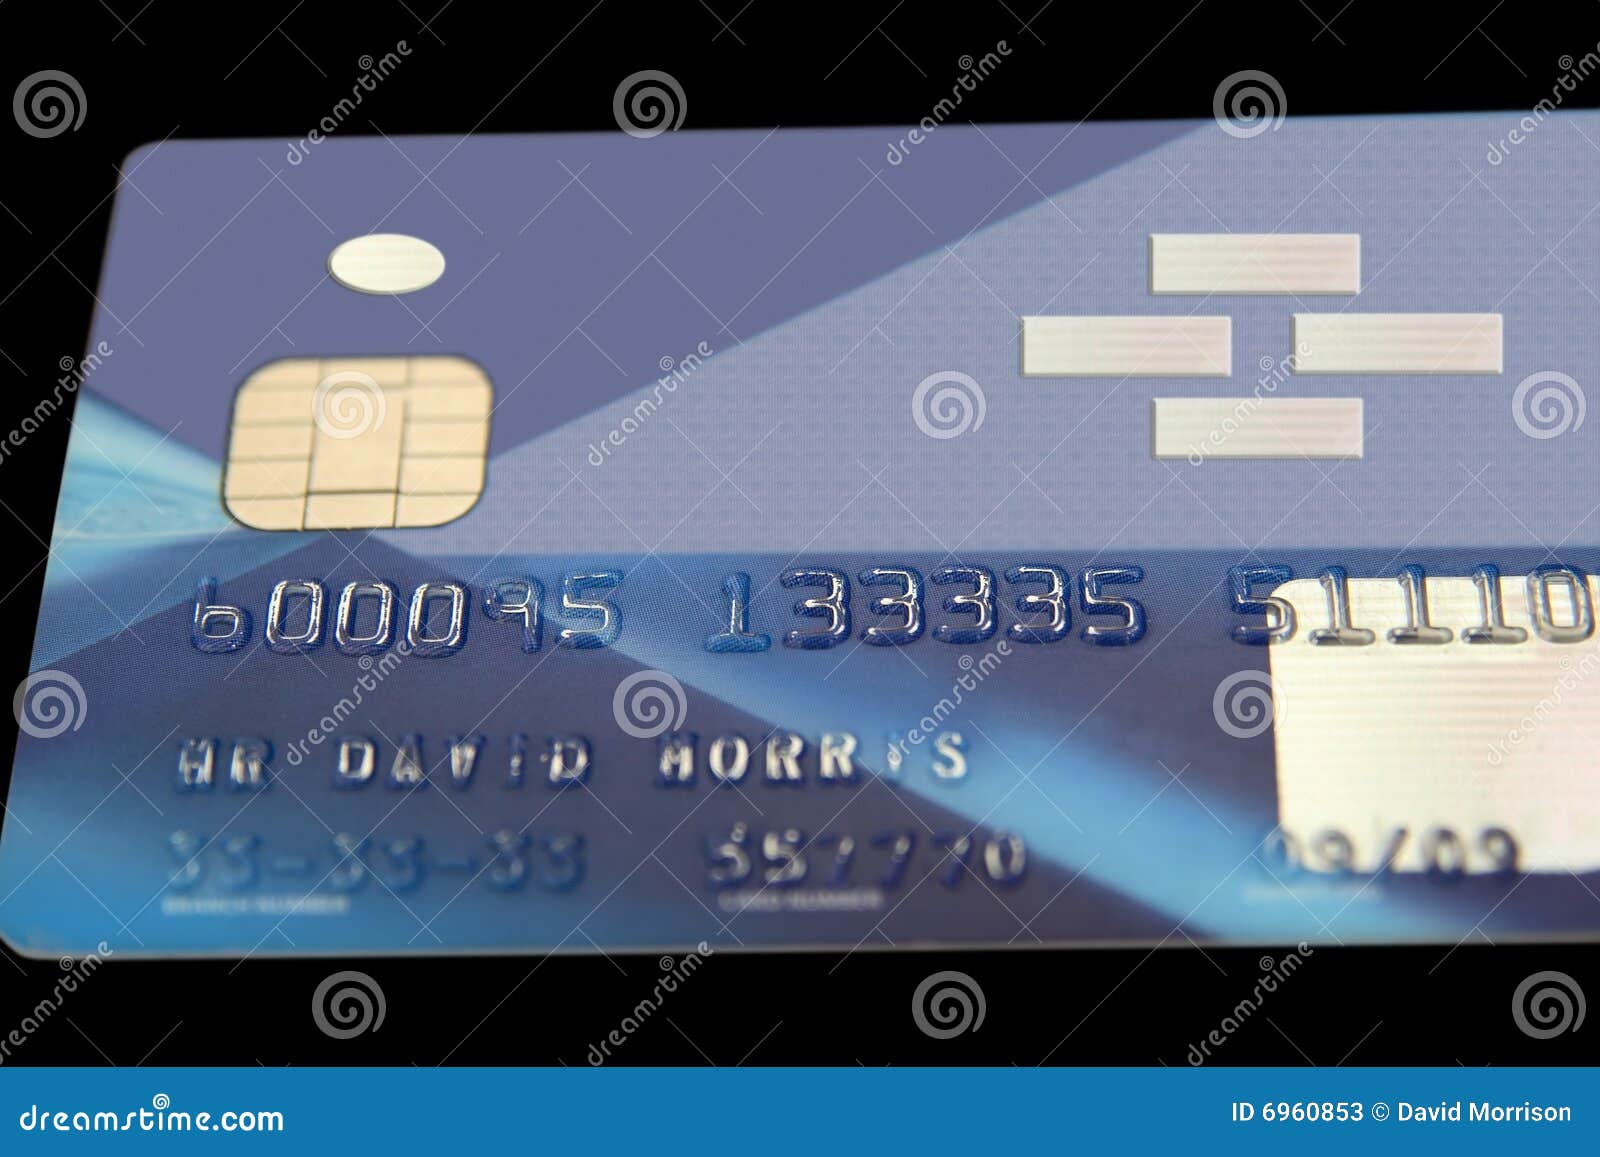 Buying credit cards on dark web